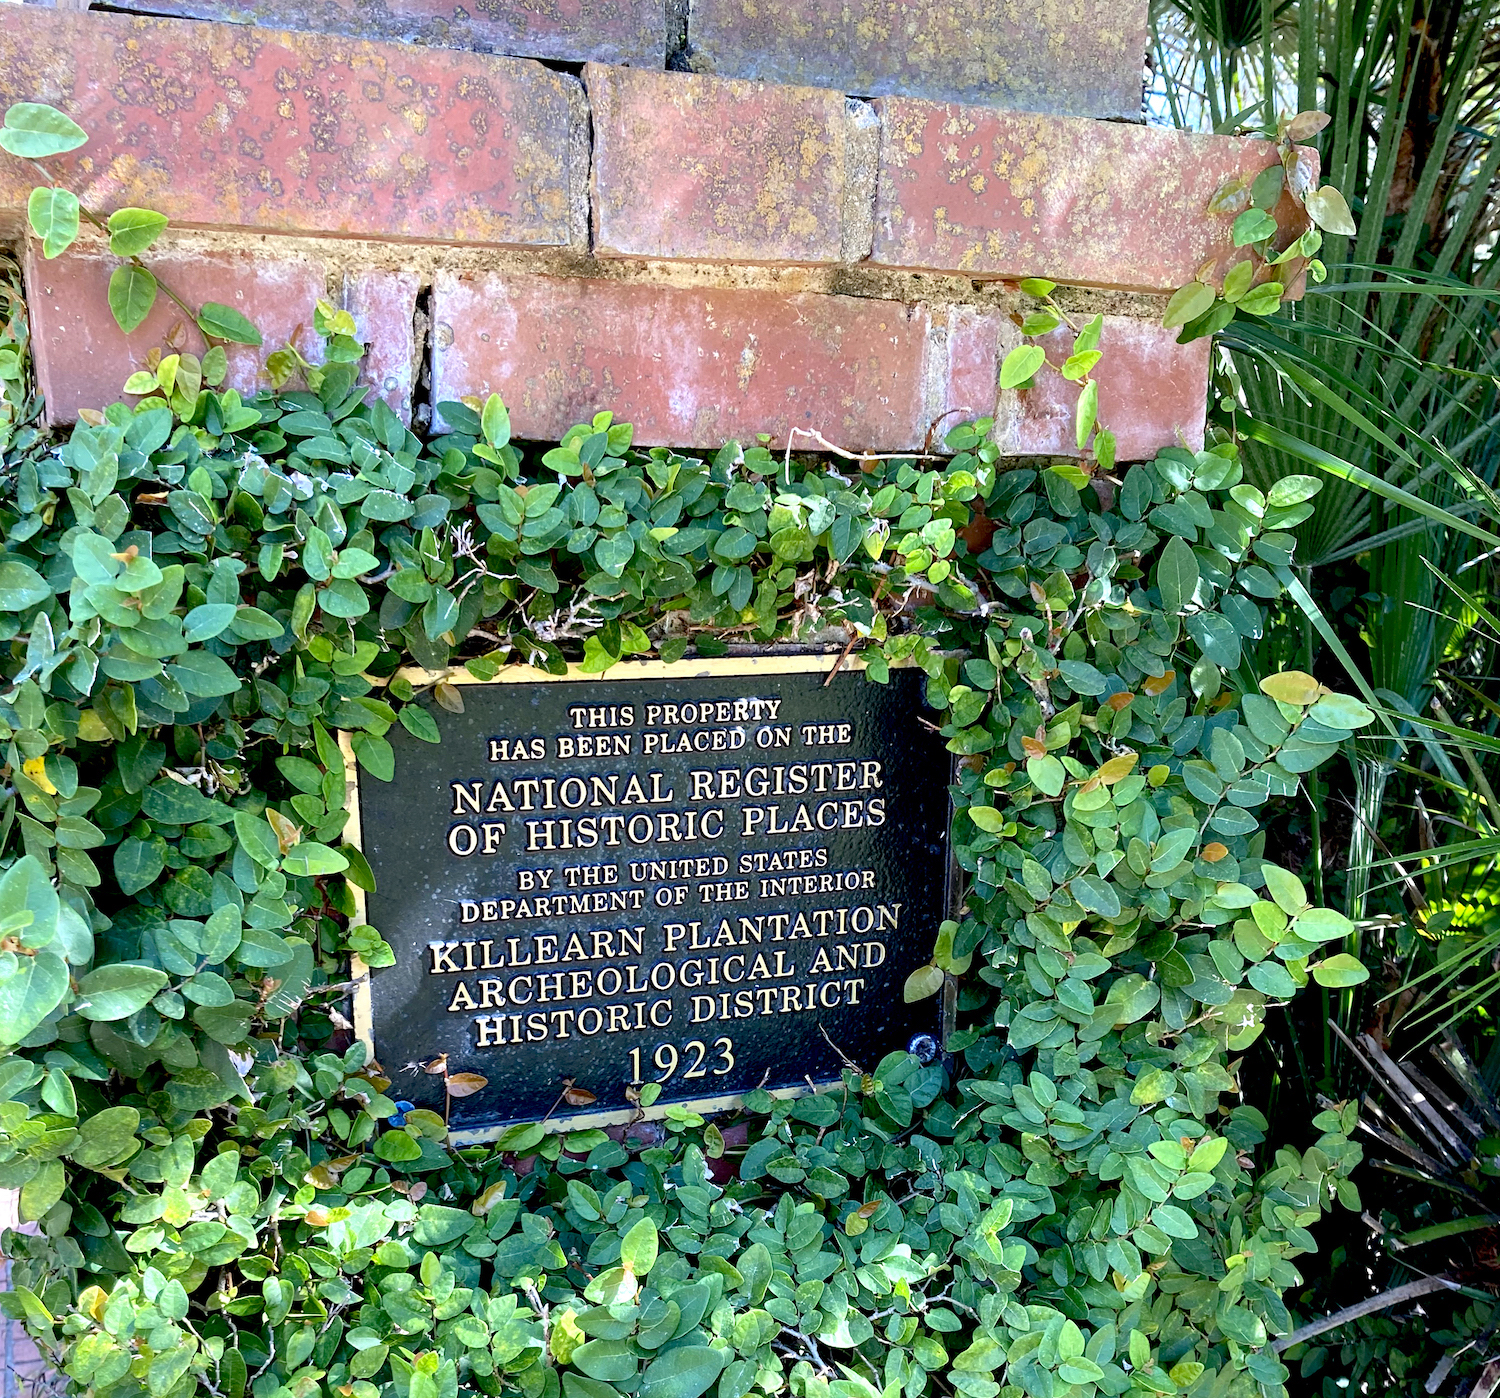 maclay gardens national register sign on brick column